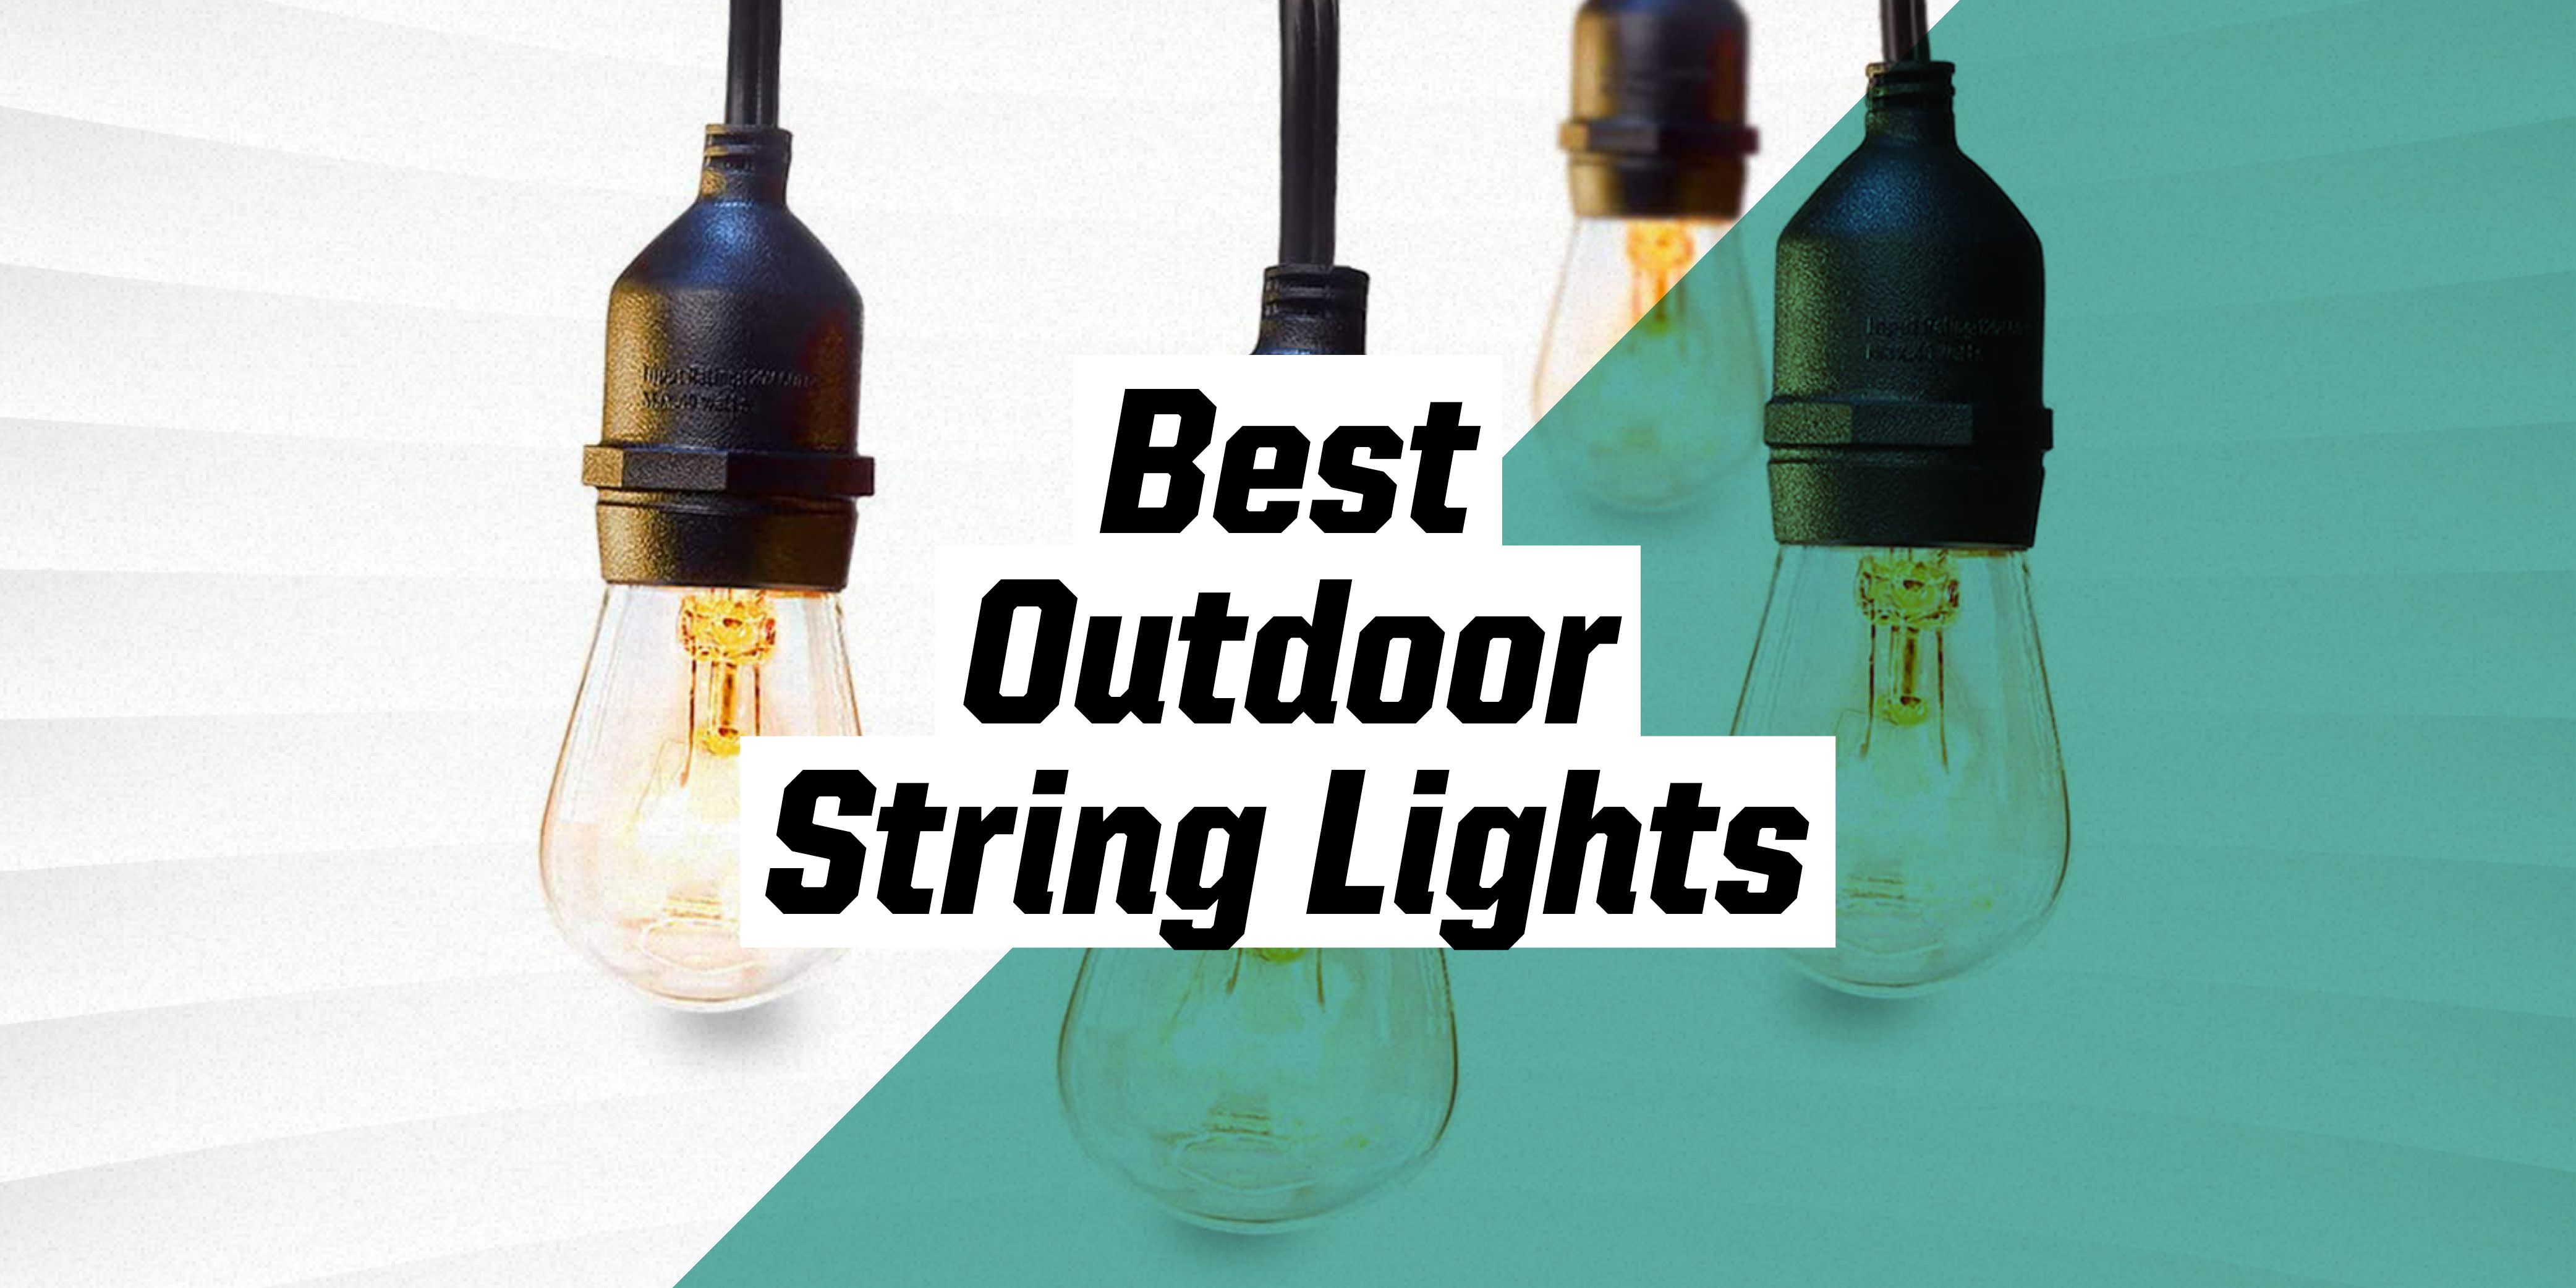 The 10 Best Outdoor String Lights 2021, Best Outdoor Lighting Strings